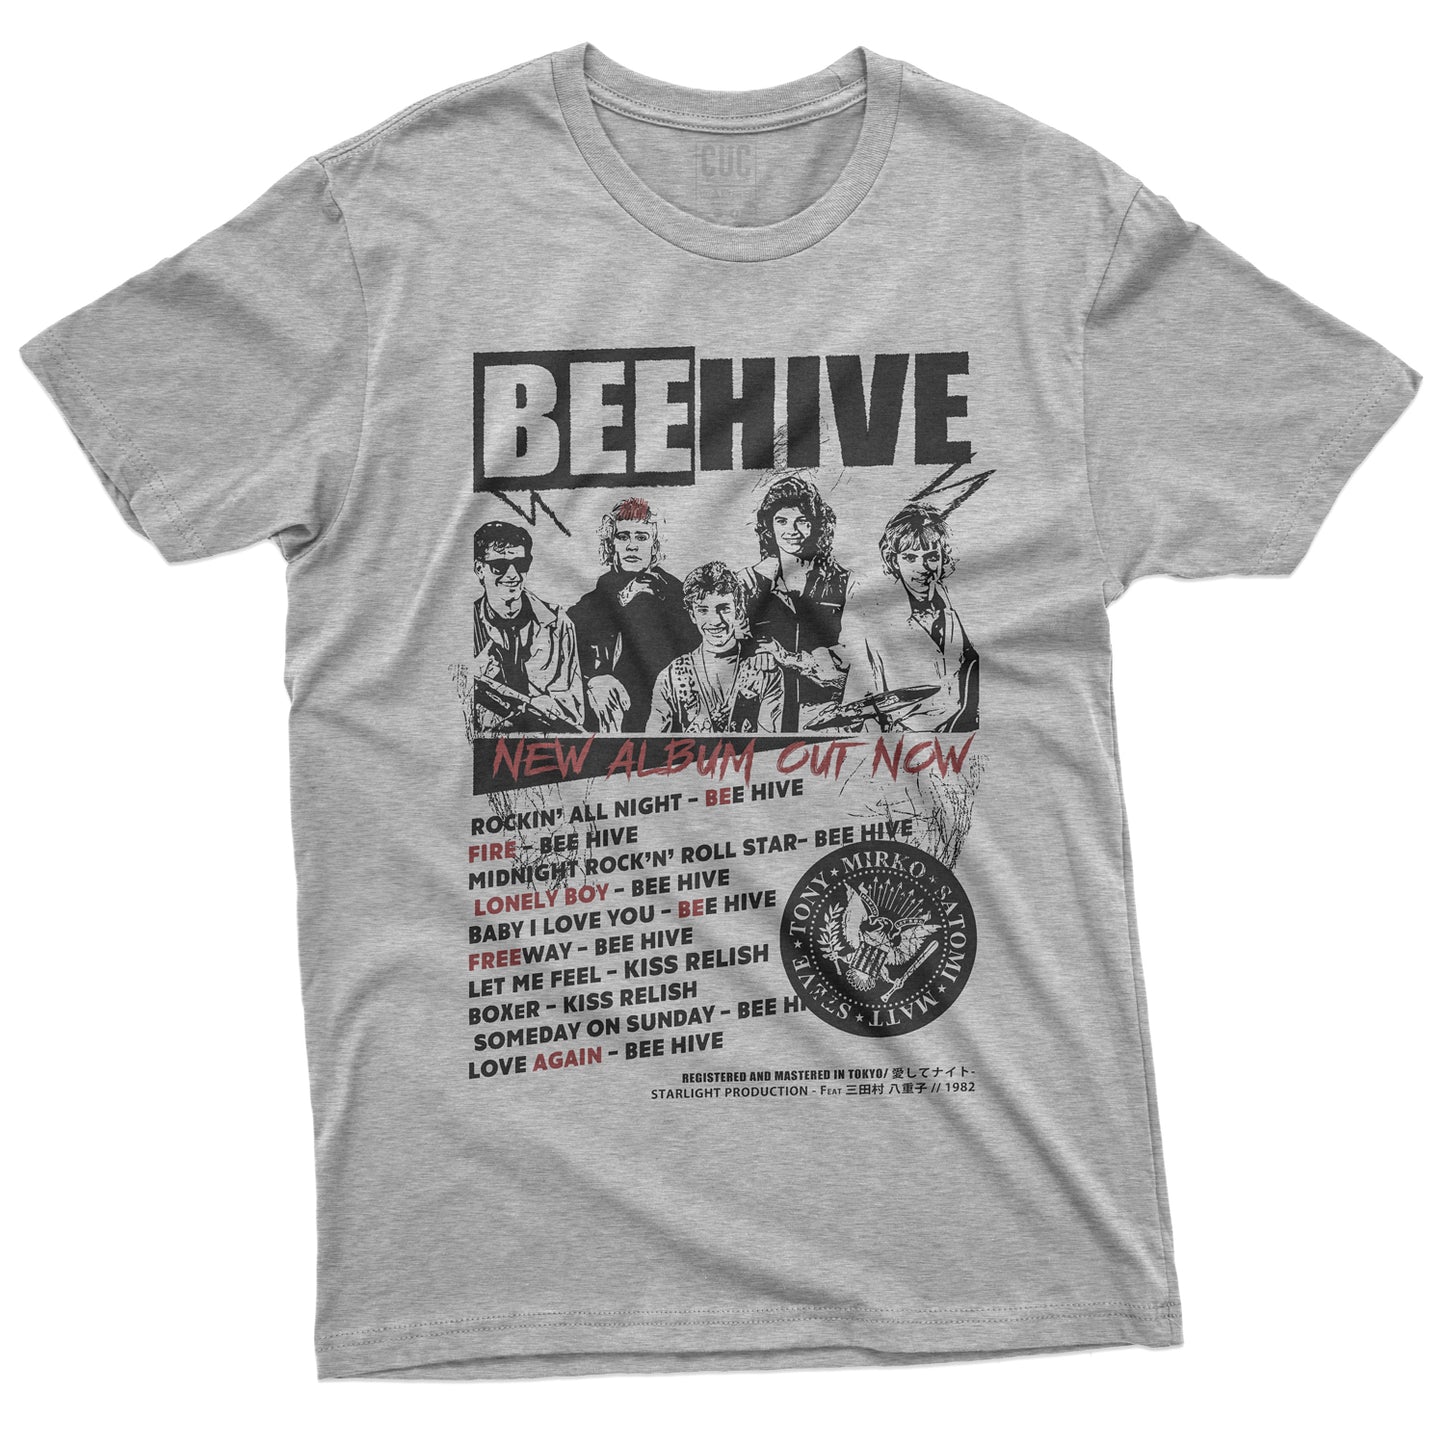 CUC T-Shirt BEEHIVE - Kiss me Licia - Rock Band  #chooseurcolor